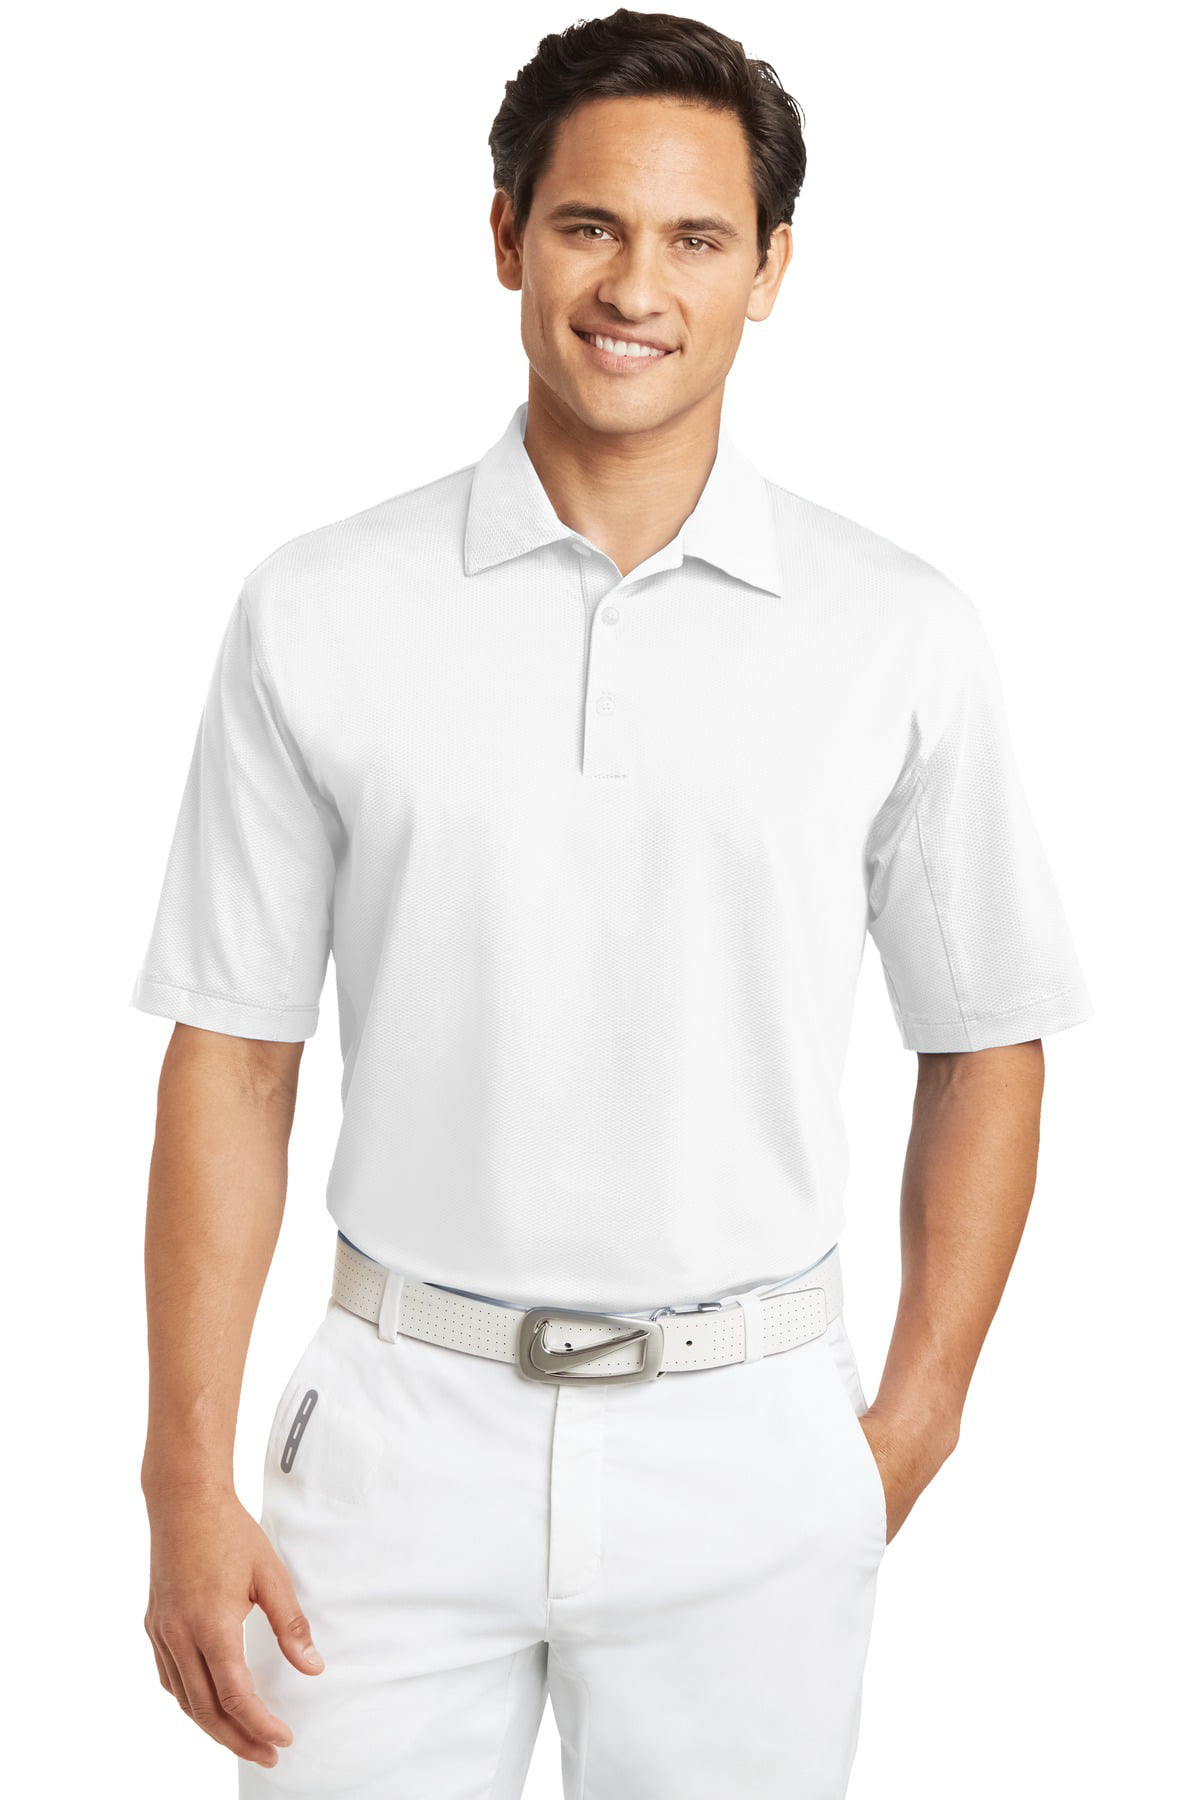 Nike Sphere Diamond Sport Shirt. White. 4XL. - Walmart.com